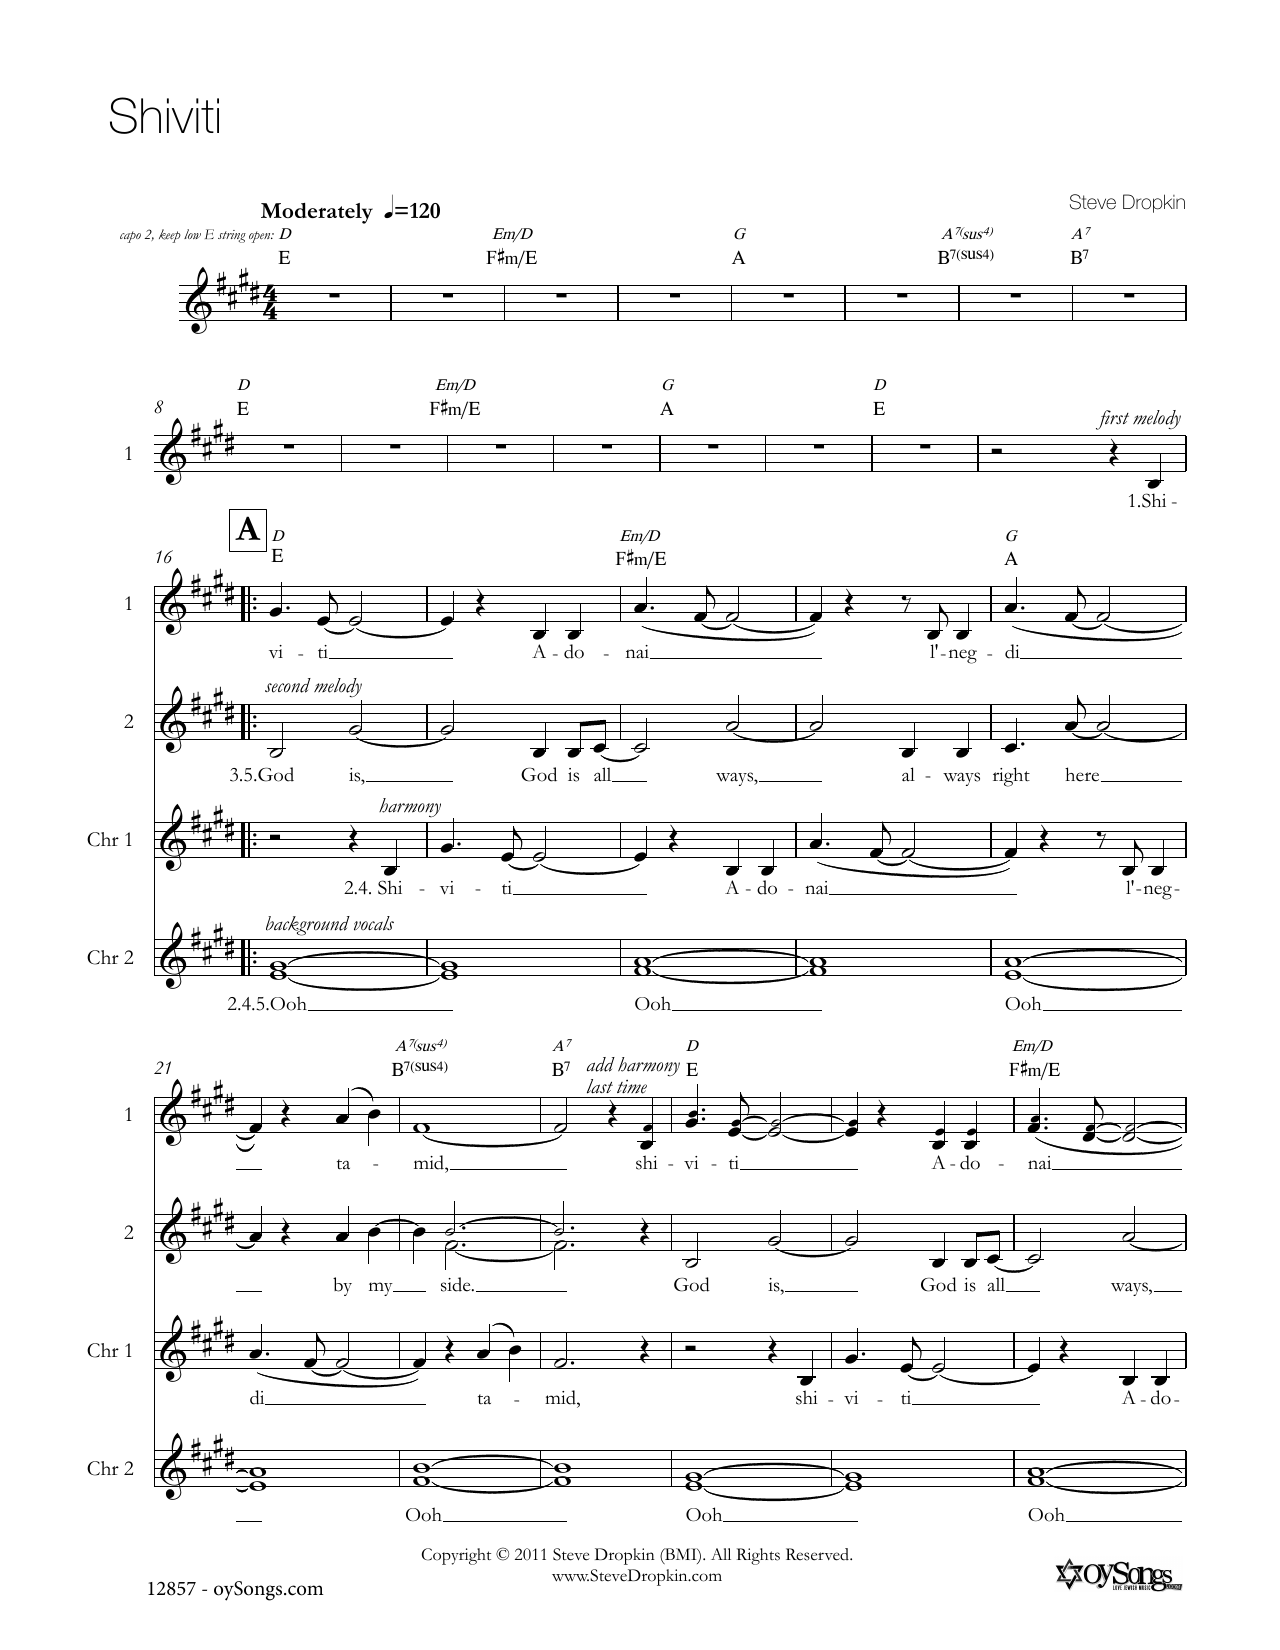 Steve Dropkin Shiviti Sheet Music Notes & Chords for Choral - Download or Print PDF